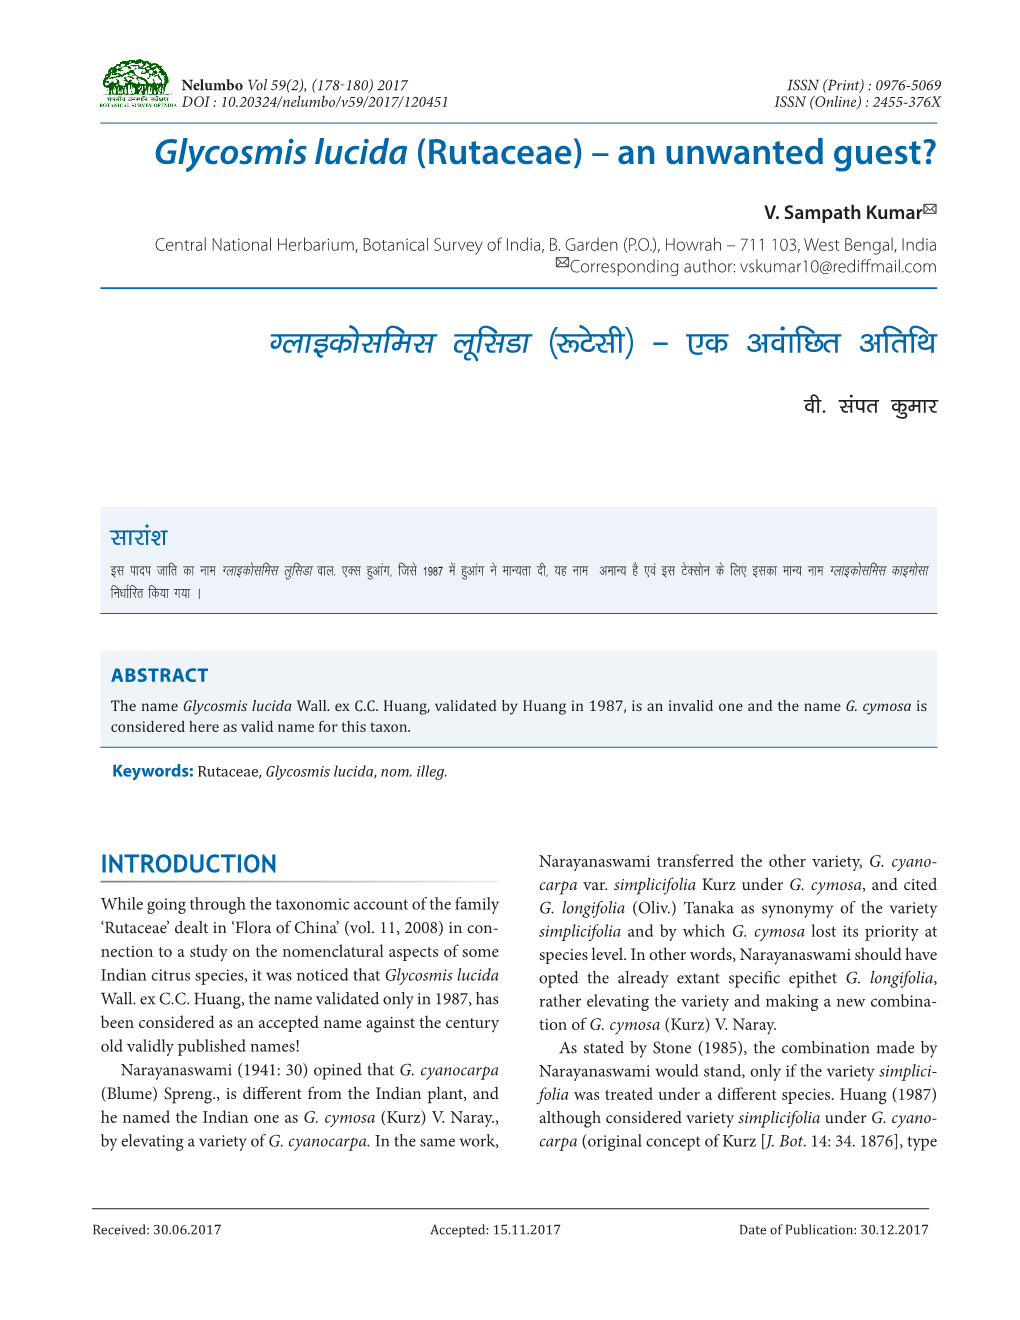 Glycosmis Lucida (Rutaceae) – an Unwanted Guest? Xykbdkslfel Ywflmk ¼:Vslh½ & ,D Voakfnr Vfrffk